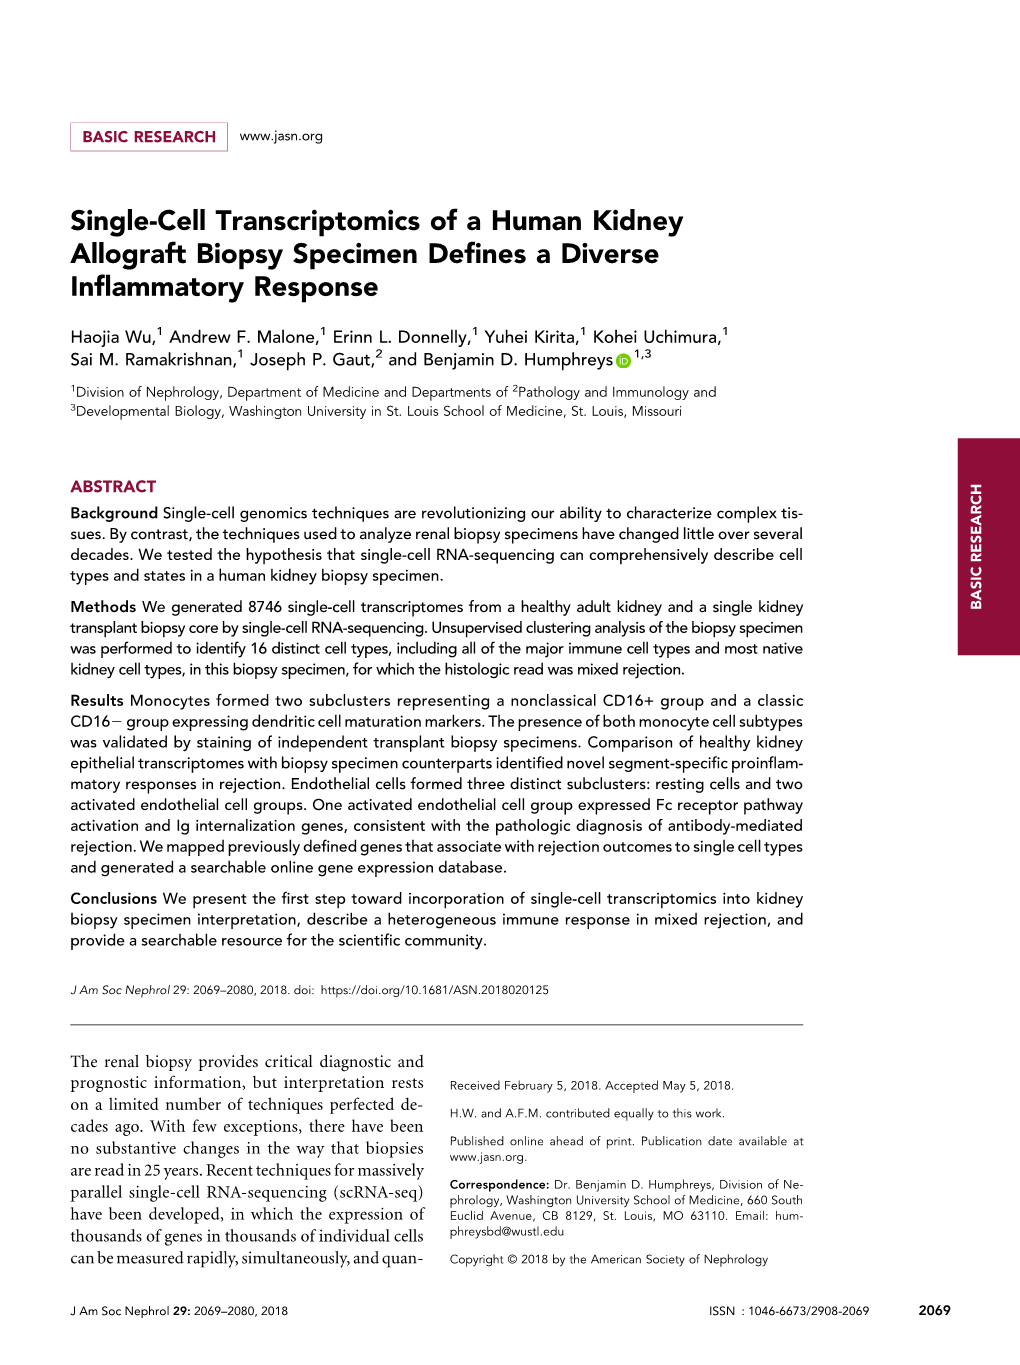 Single-Cell Transcriptomics of a Human Kidney Allograft Biopsy Specimen Deﬁnes a Diverse Inﬂammatory Response